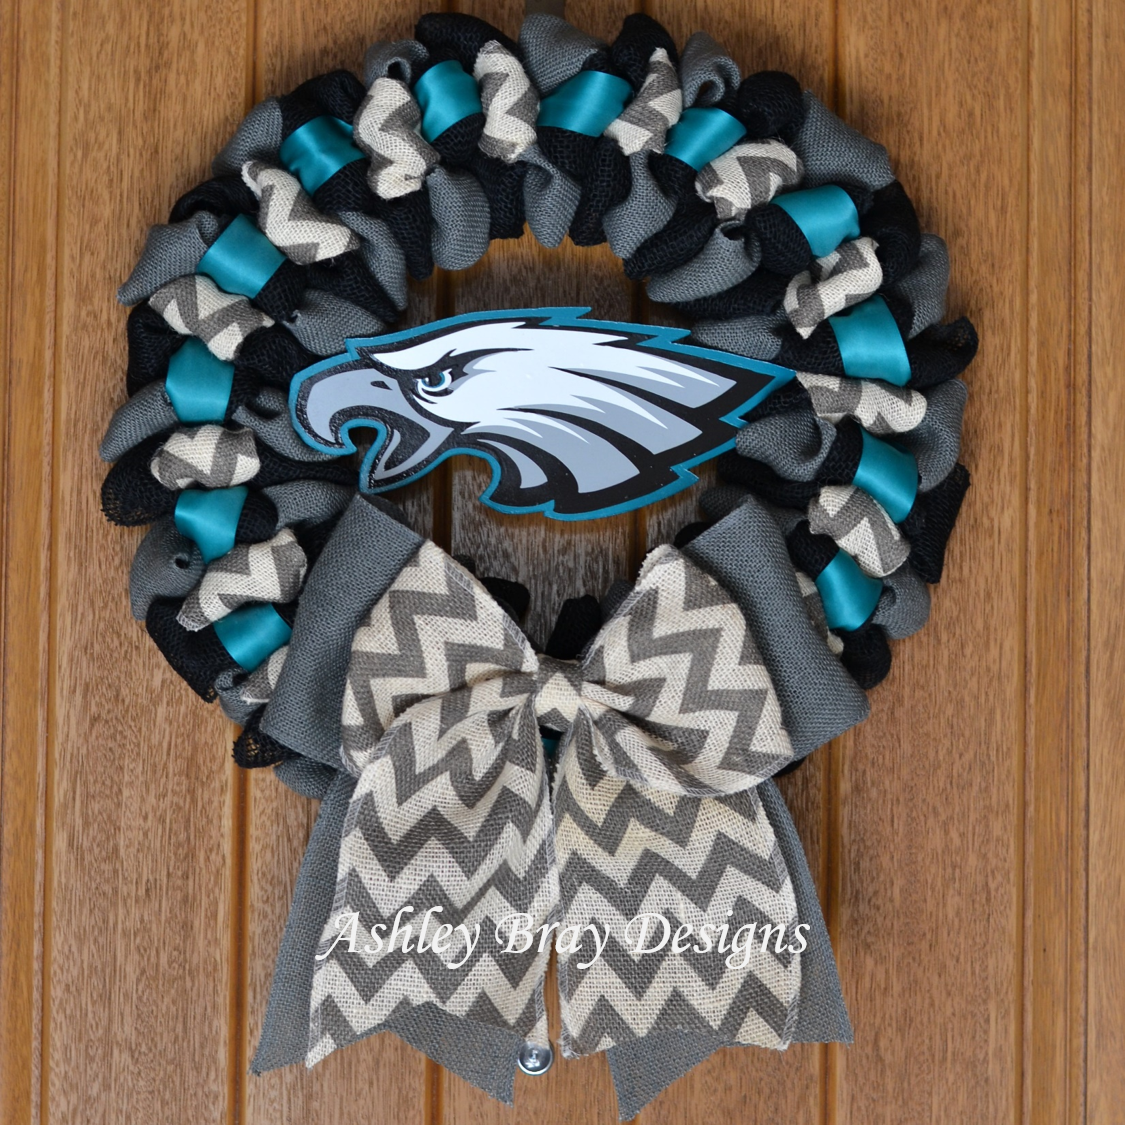 Philadelphia Eagles Wreath – Ashley Bray Designs